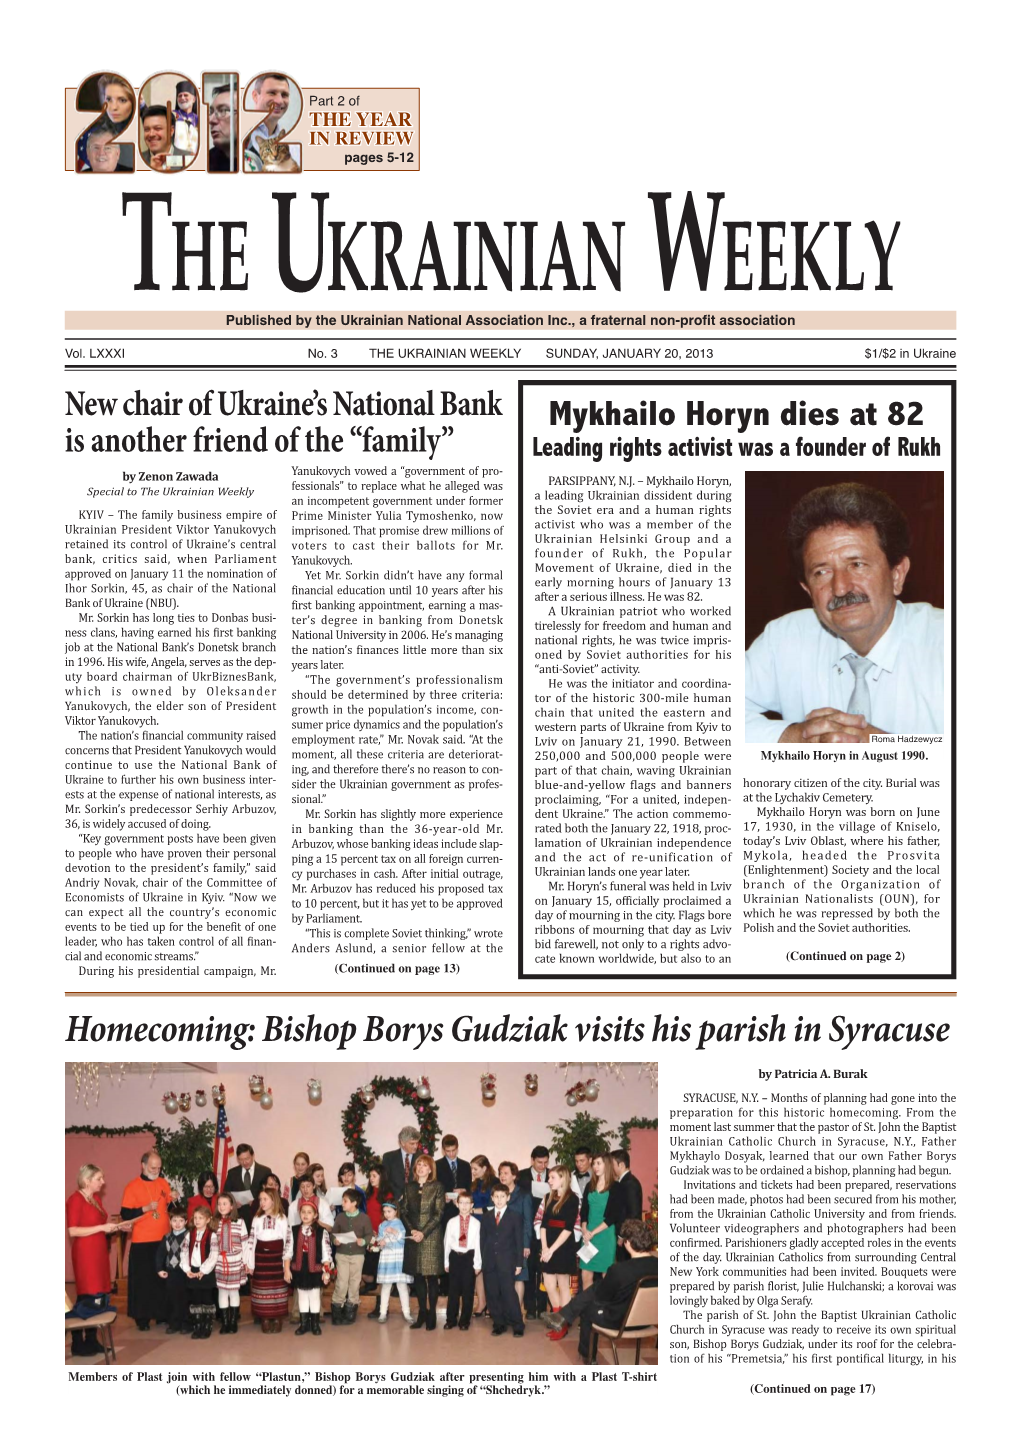 The Ukrainian Weekly 2013, No.3